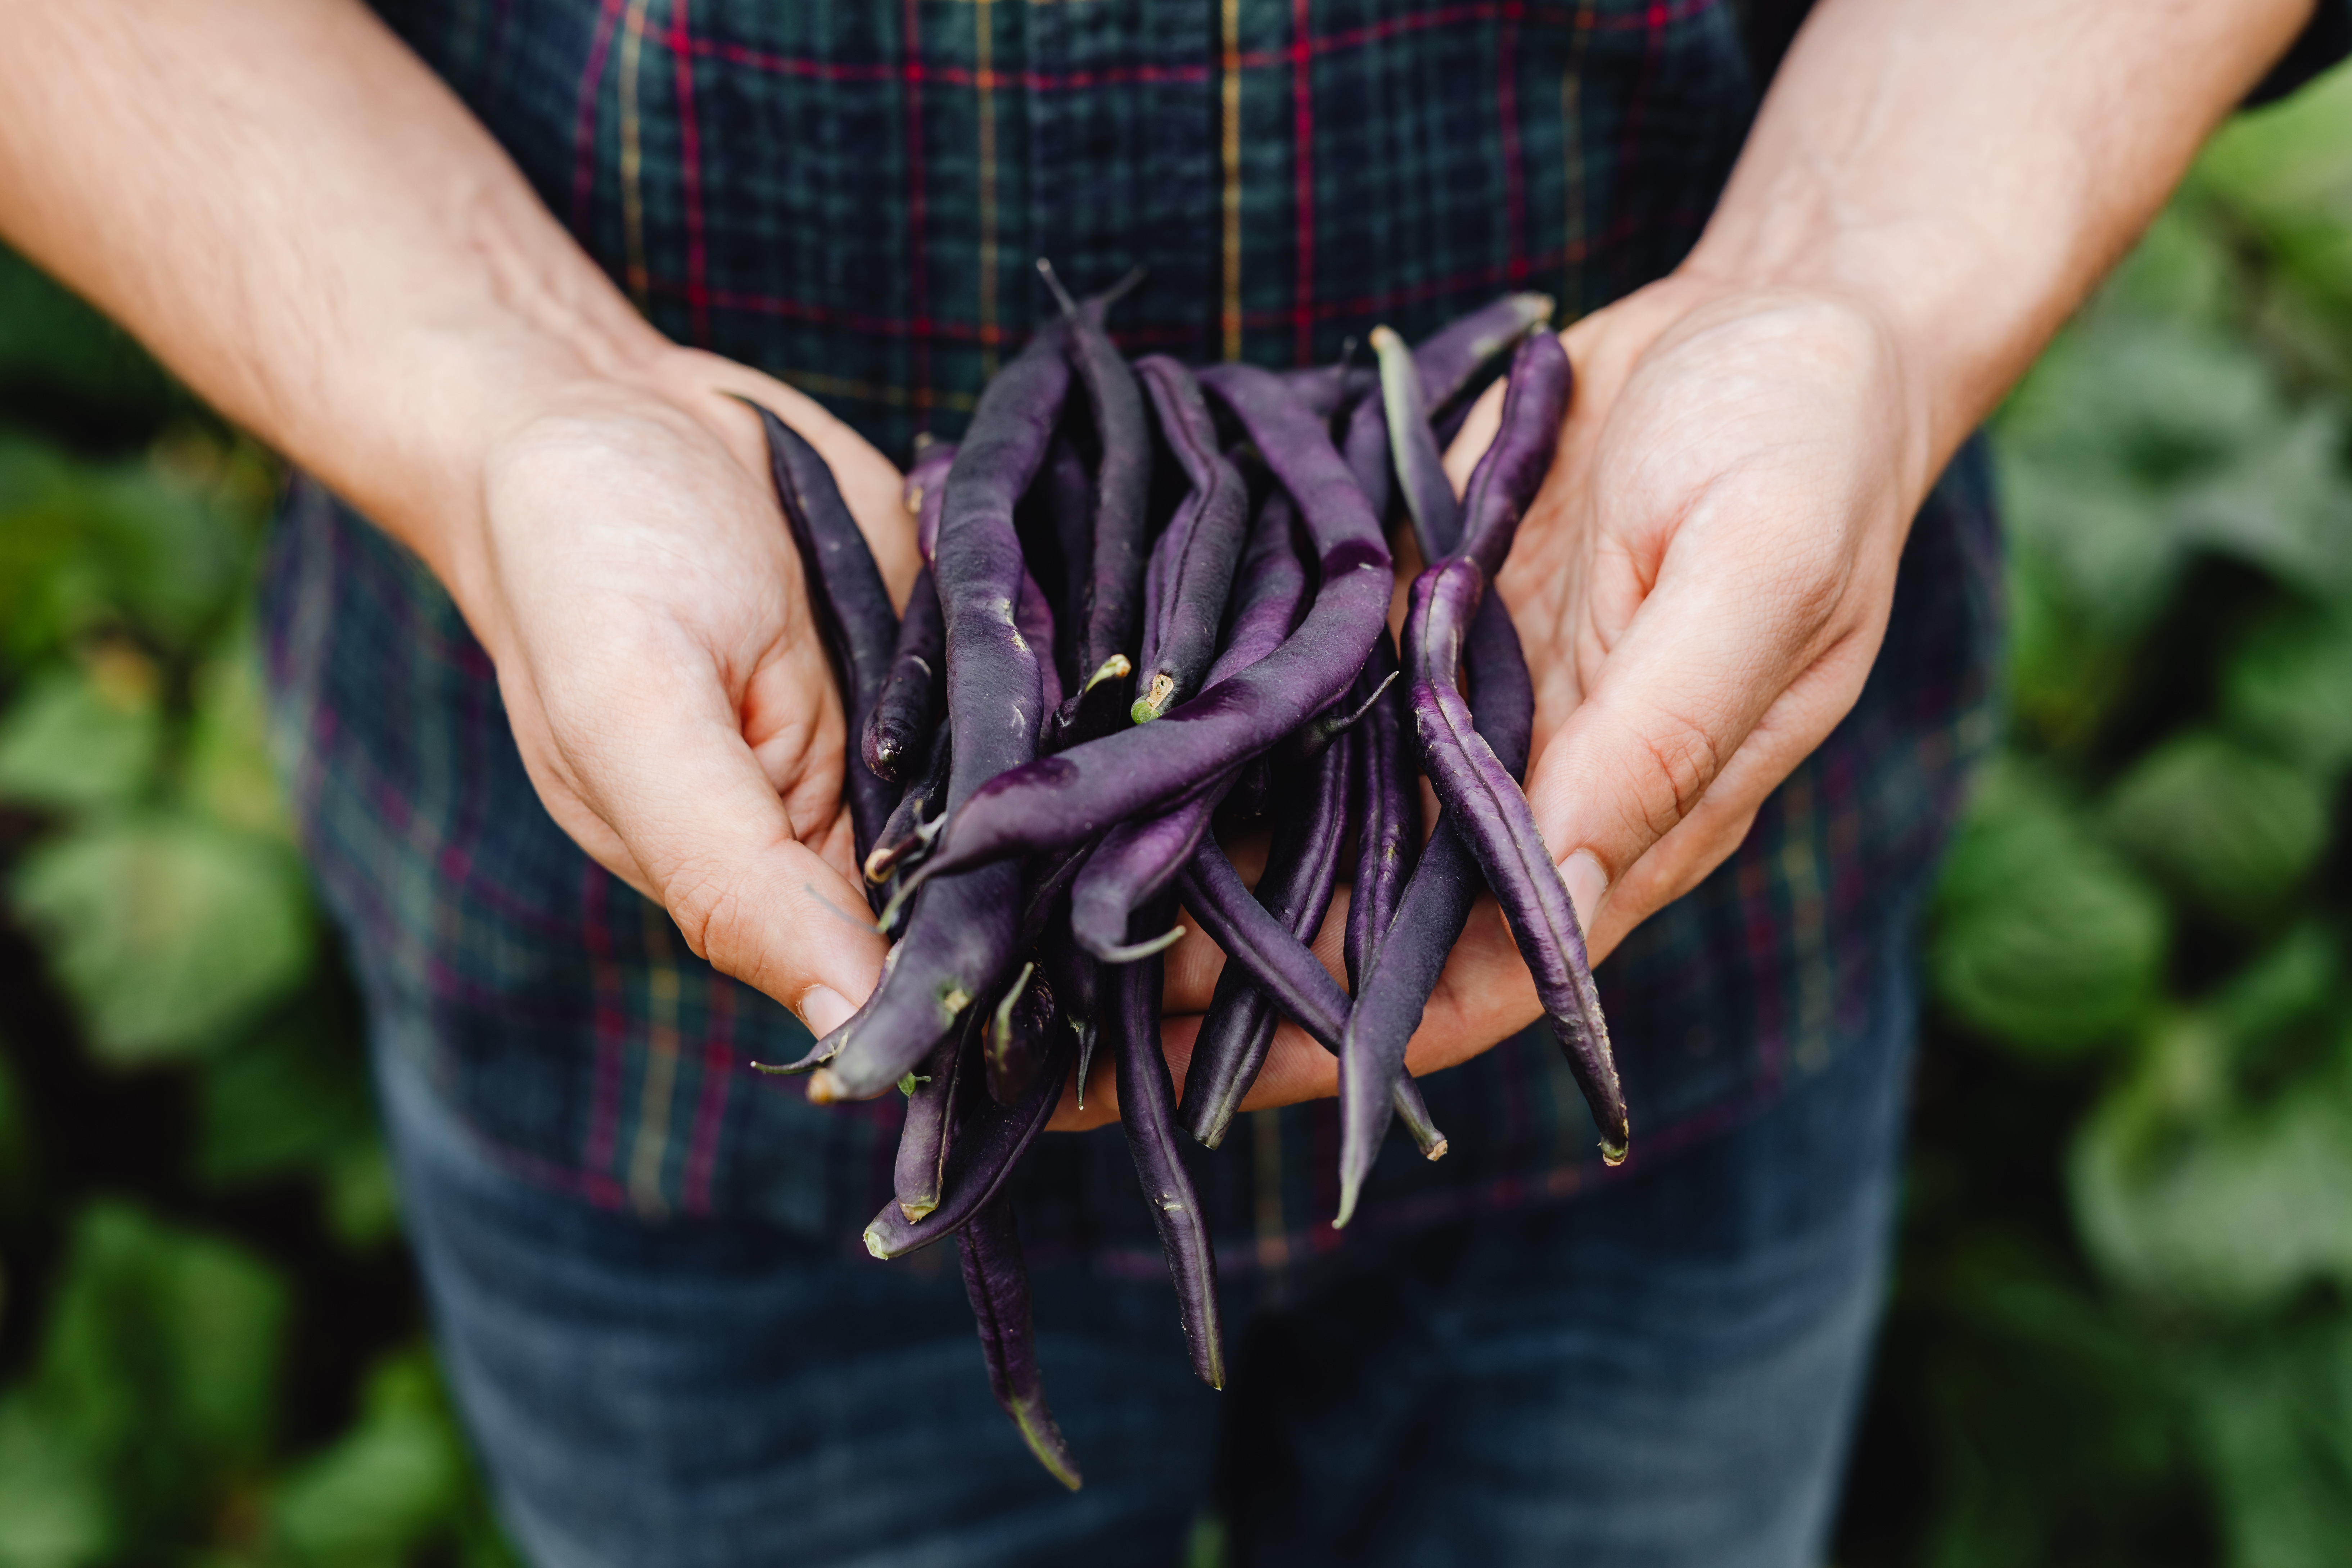 Purple beans